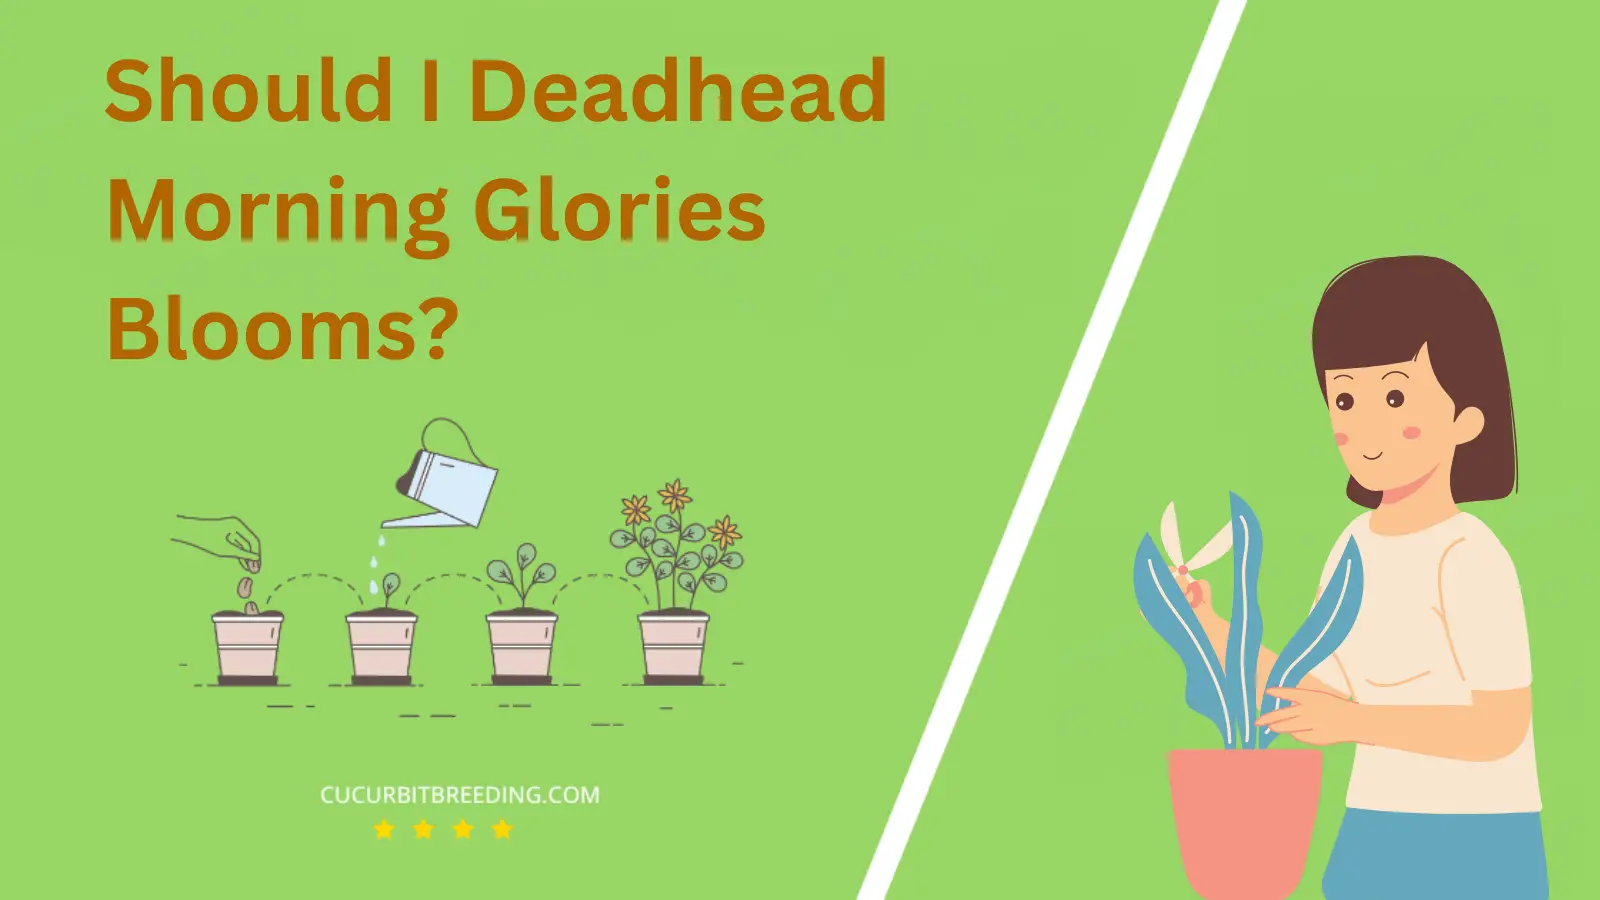 Should I Deadhead Morning Glories Blooms?